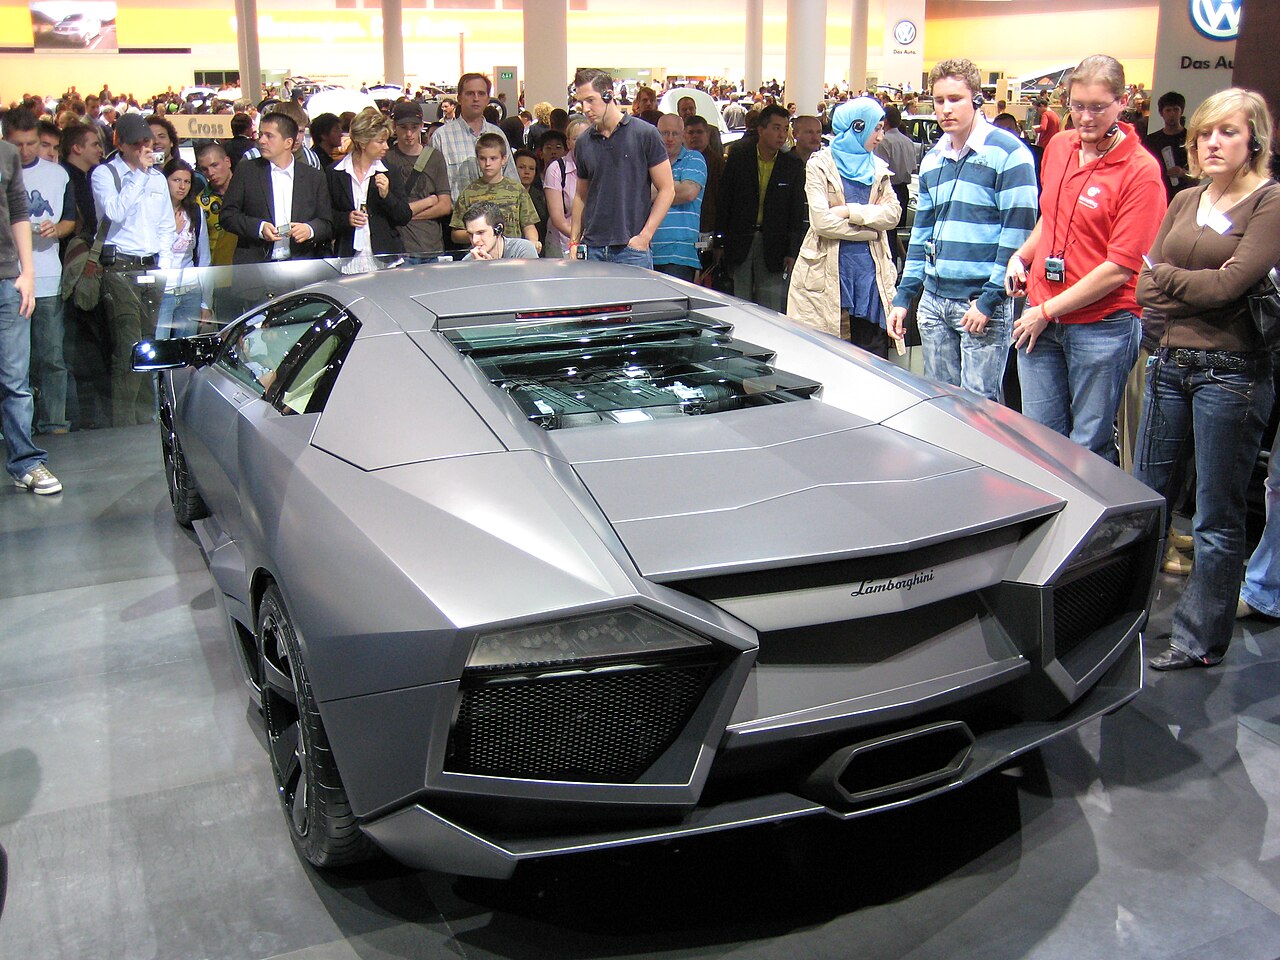 File:Lamborghini Reventon.jpg - Wikipedia